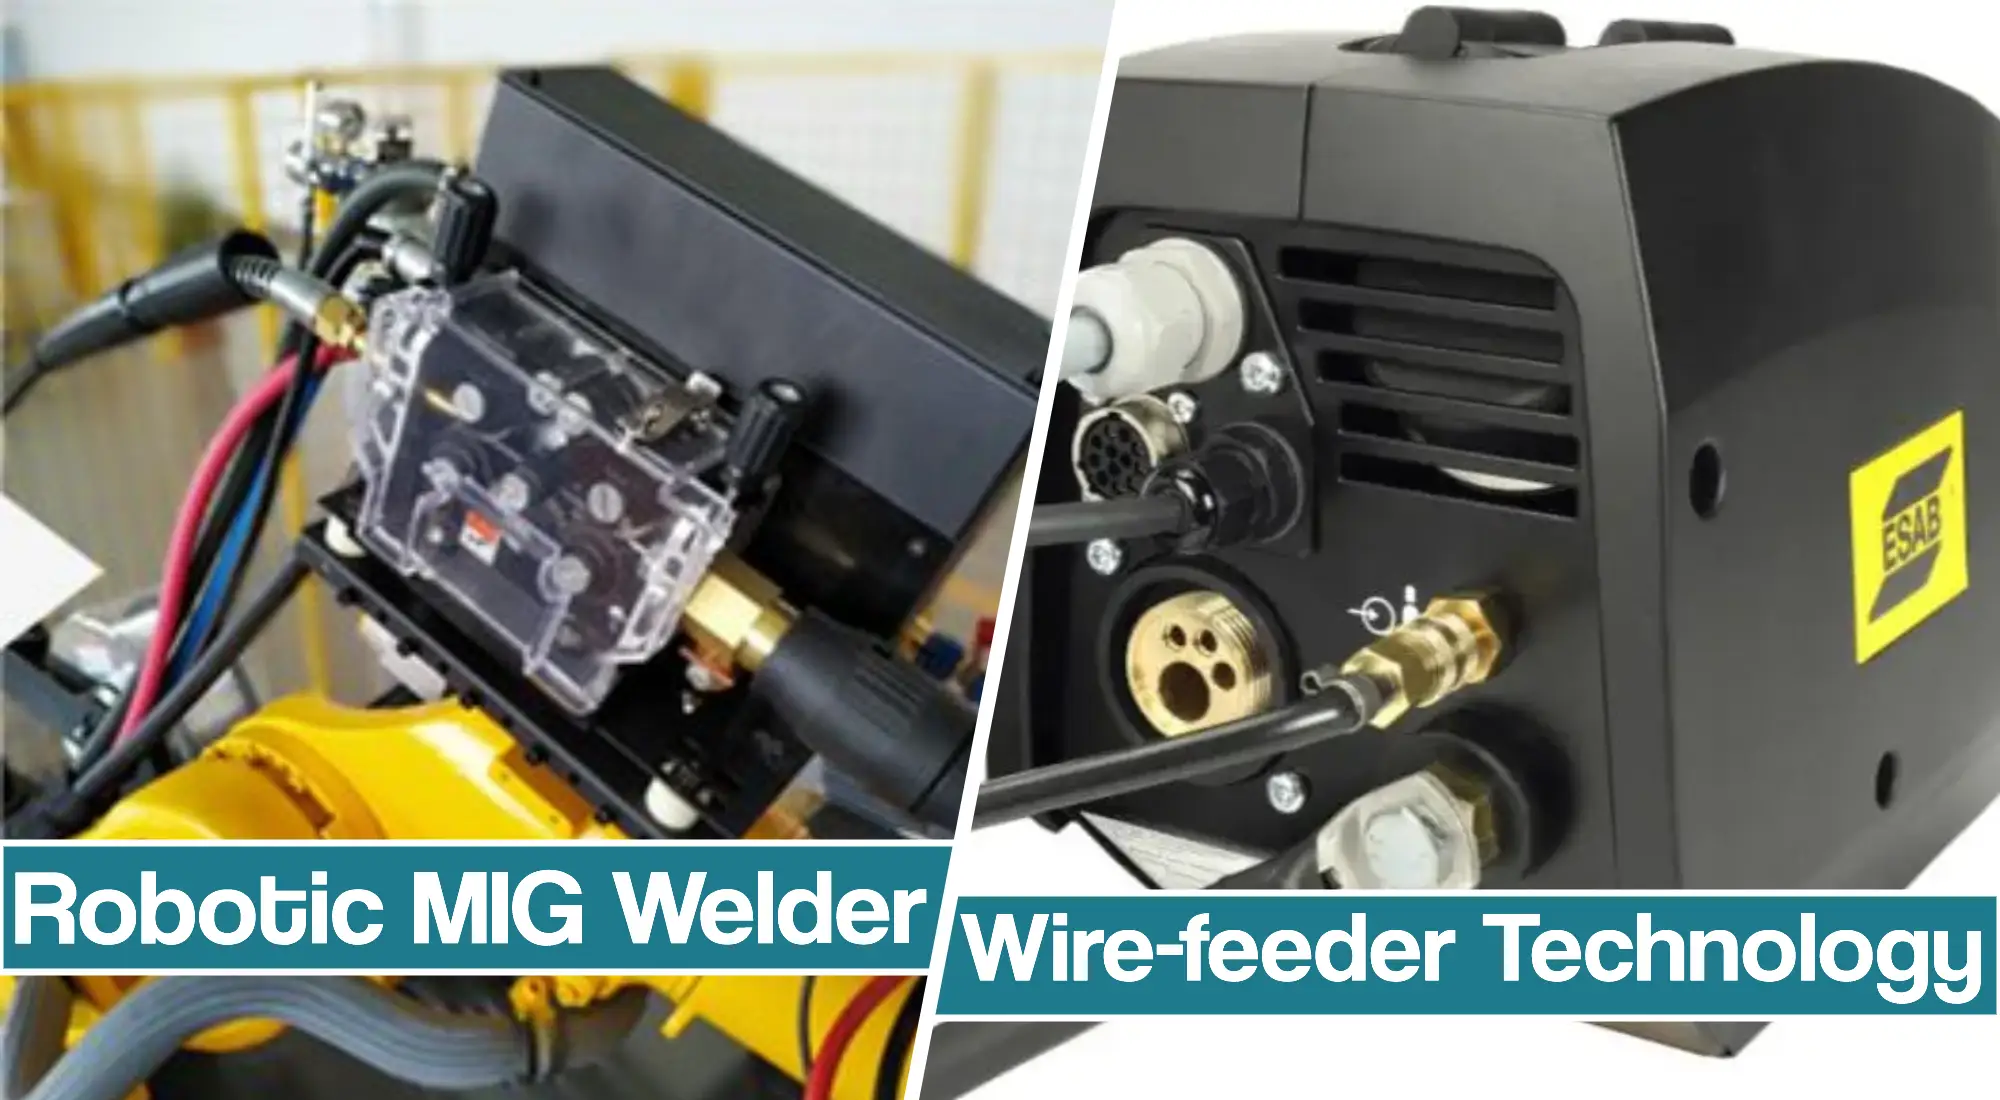 MIG Welder Wire-feeder Technology Explained